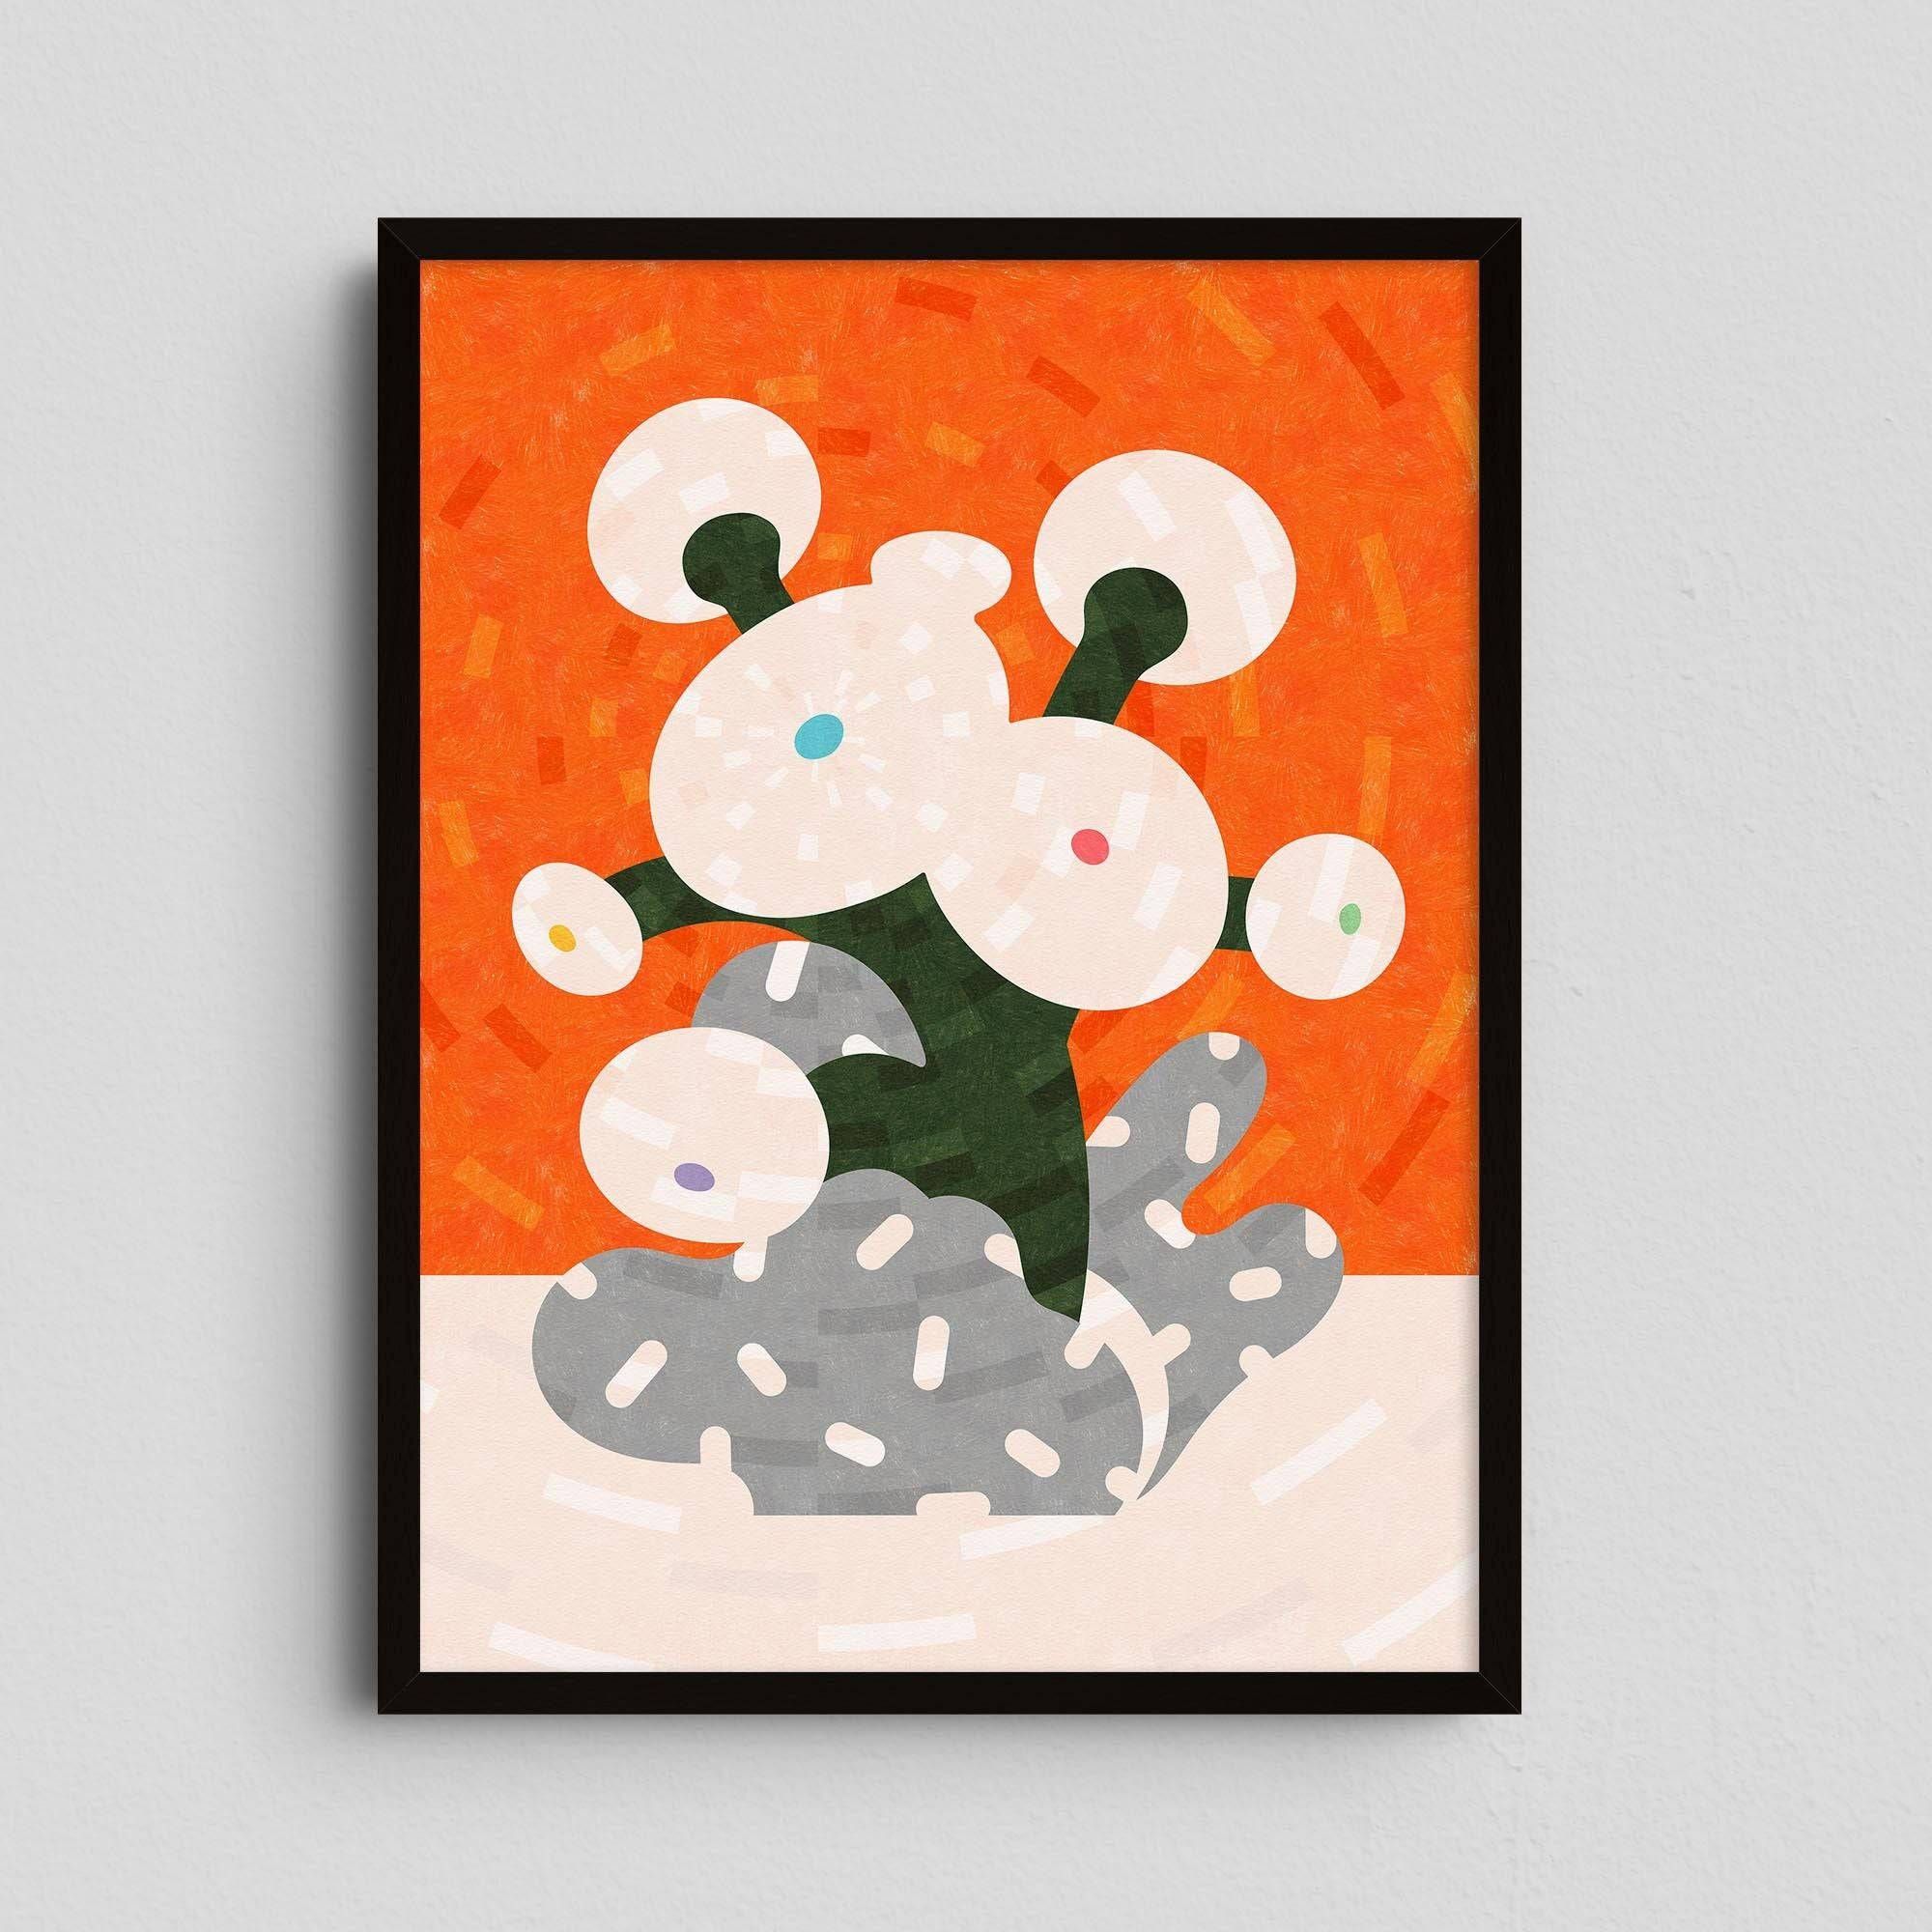 Decorating Plants 03 - Monu